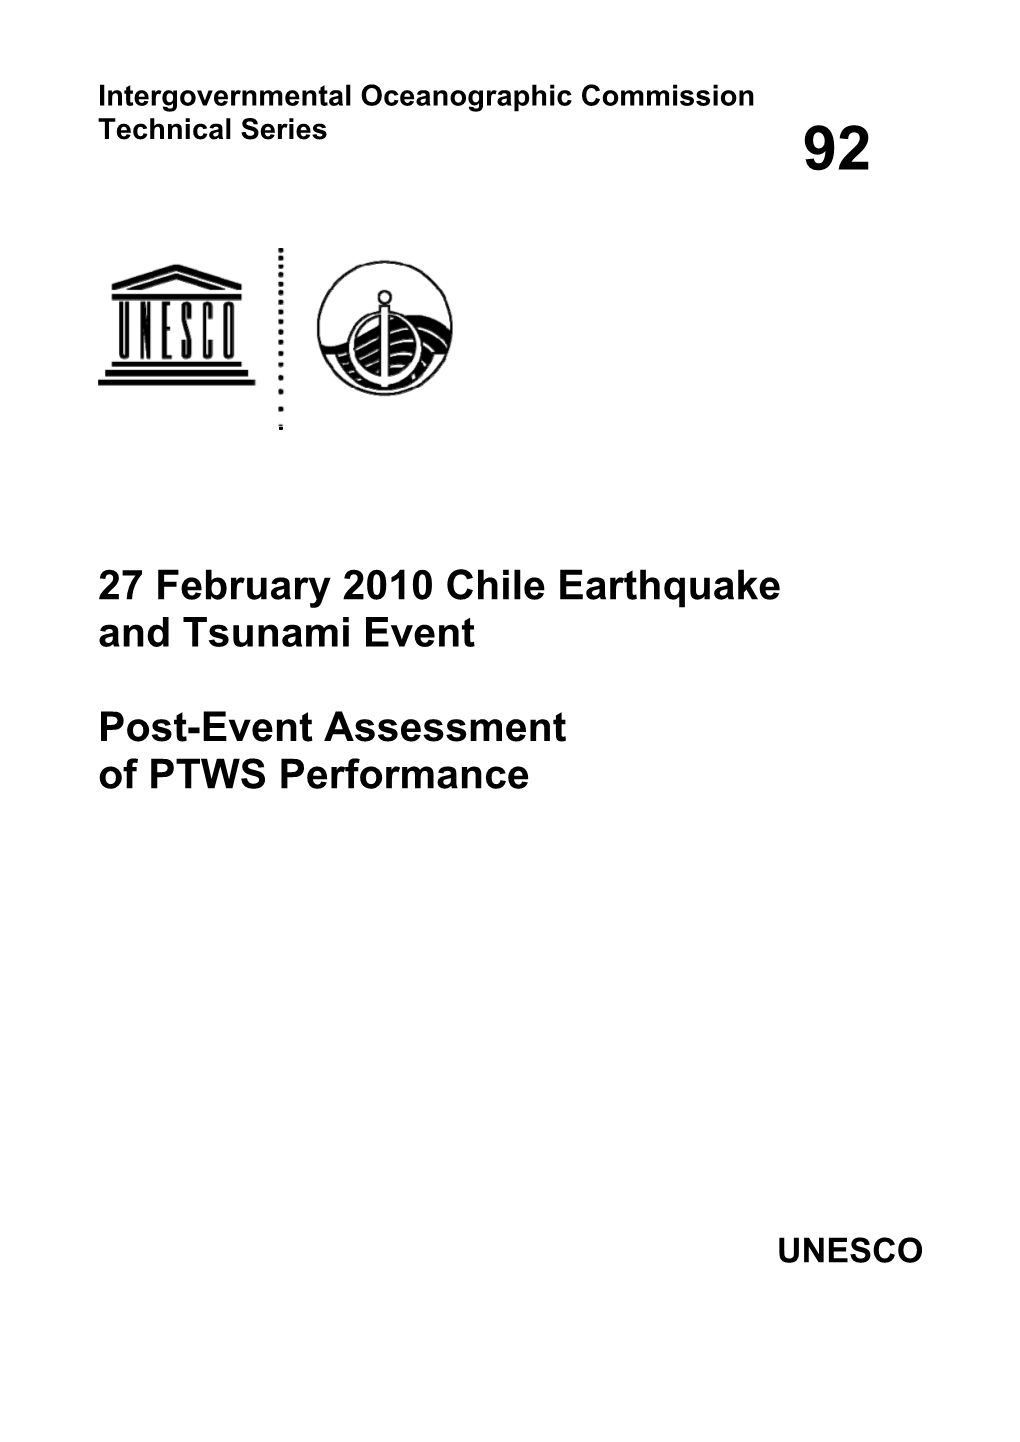 27 February 2010 Chile Earthquake and Tsunami Event: Post-Event